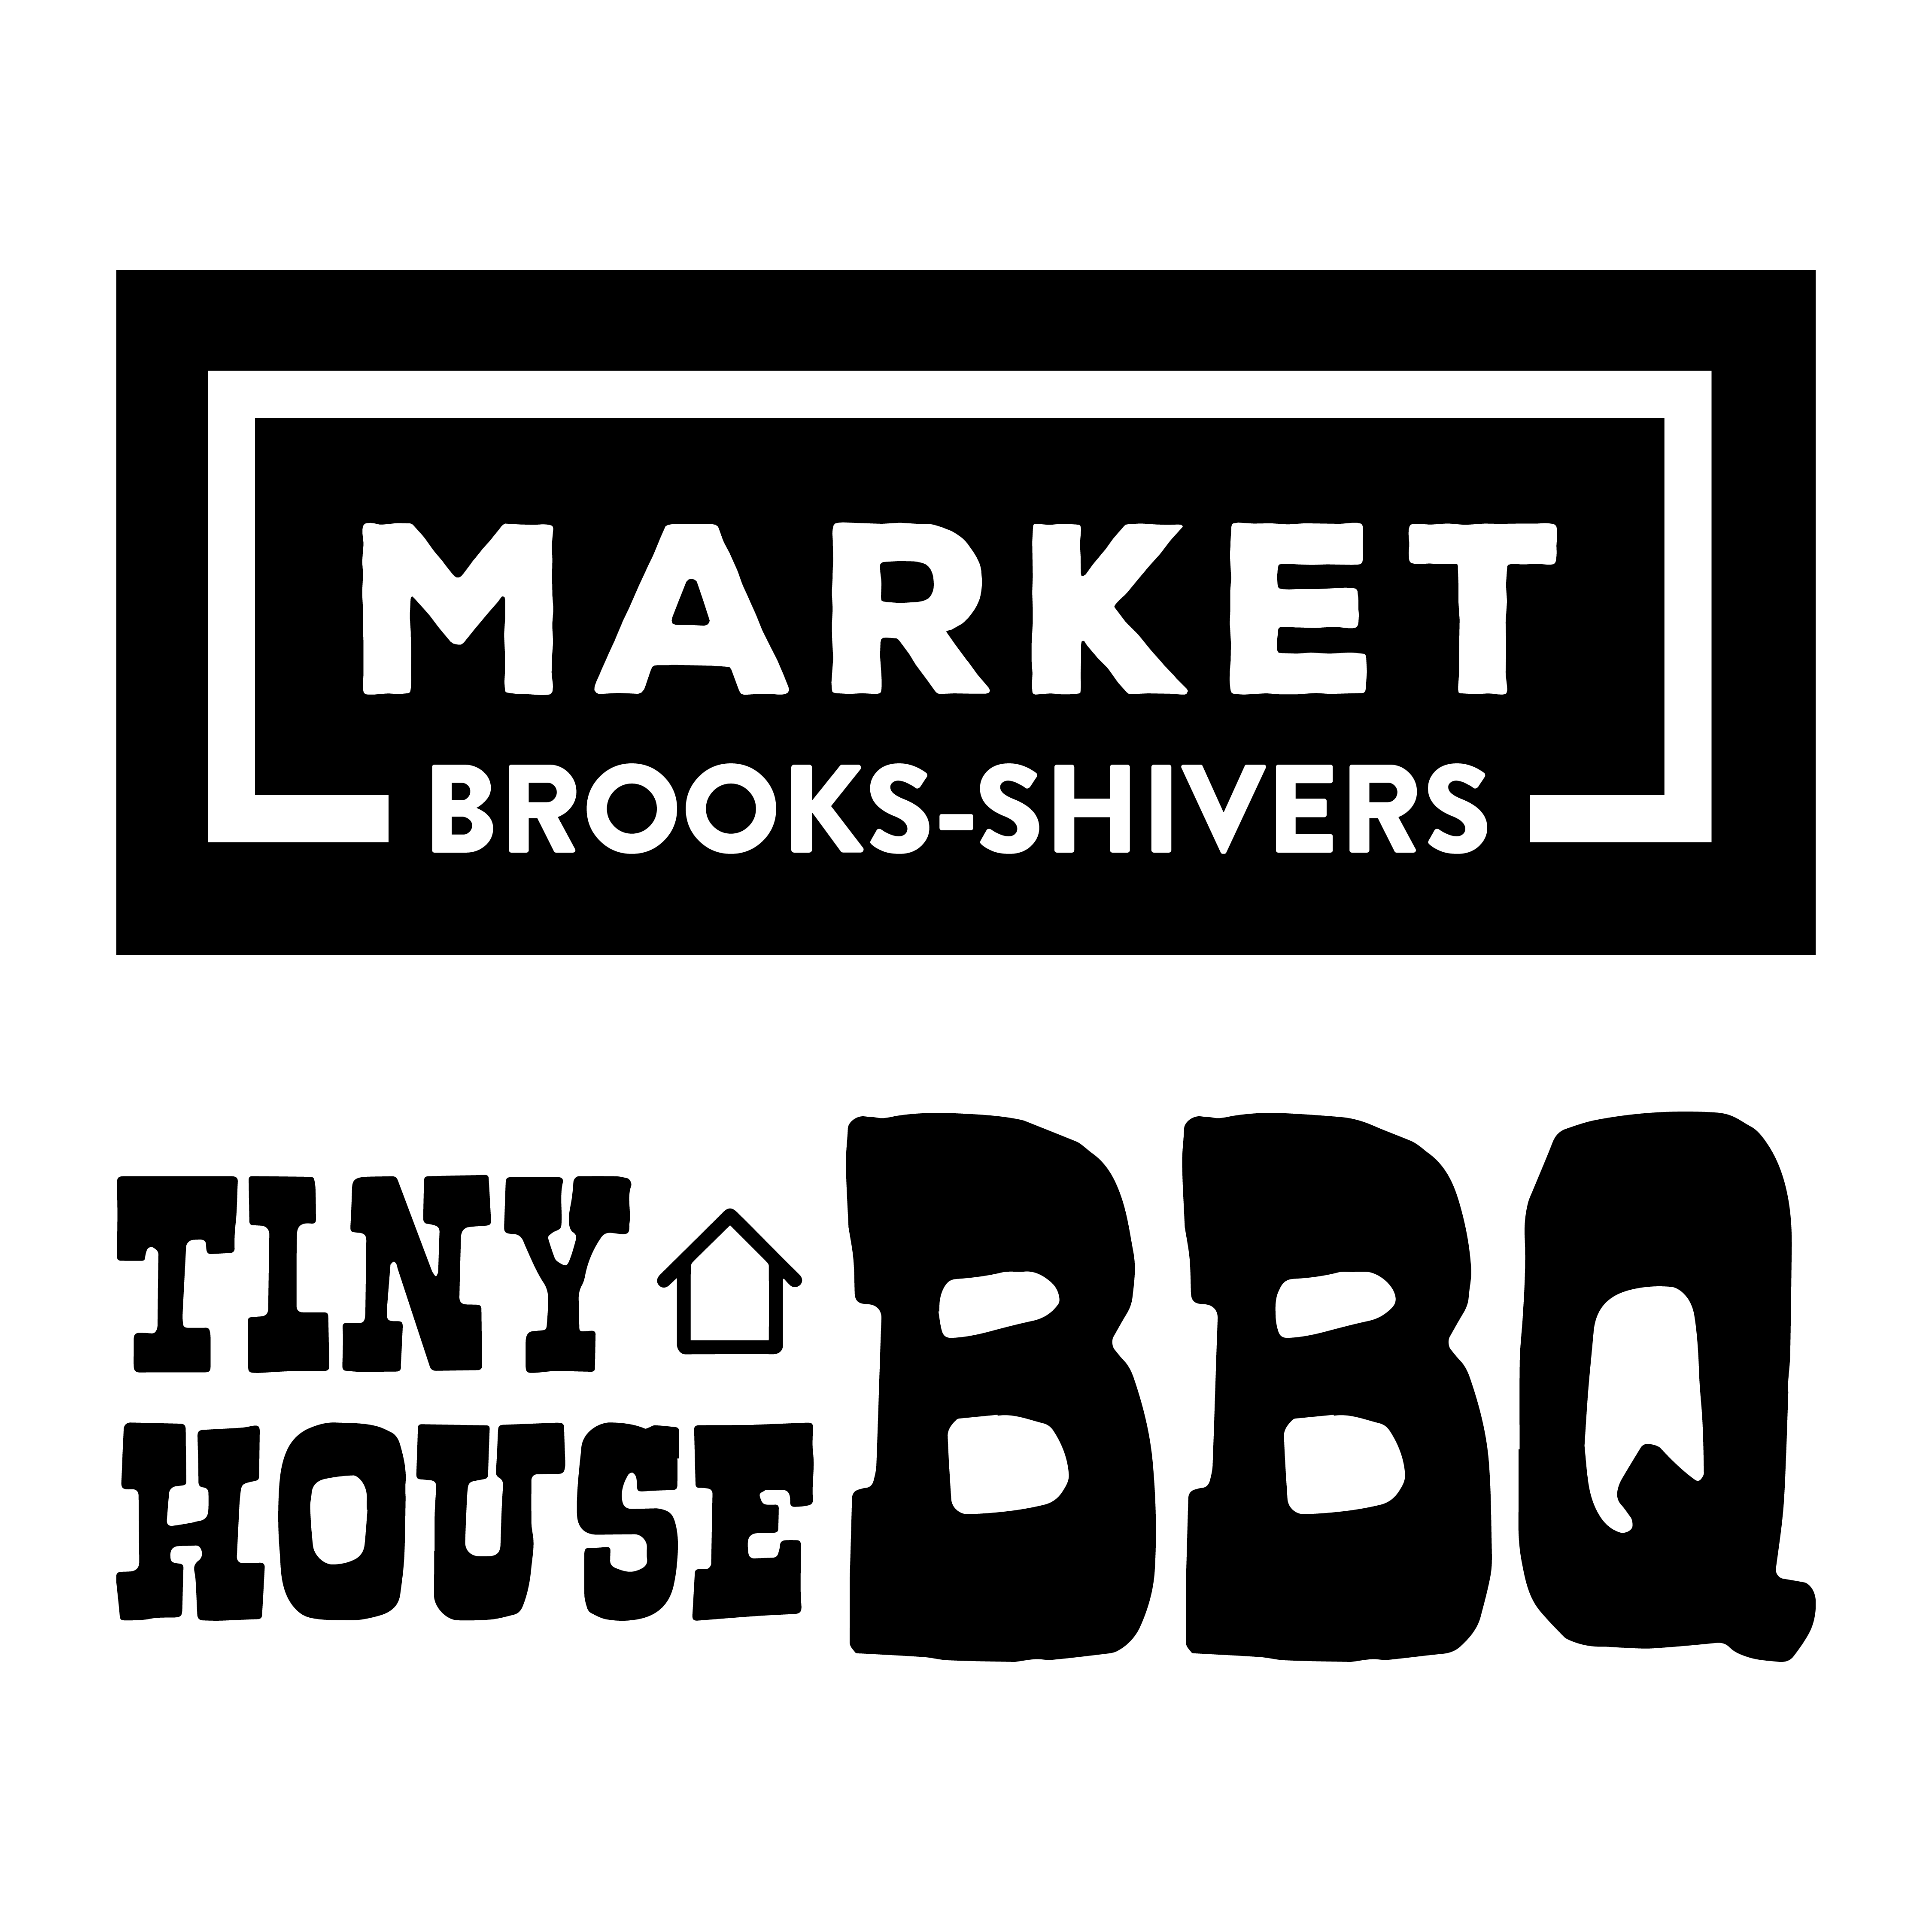 Market - Brooks - Shivers featuring Tiny House BBQ logo